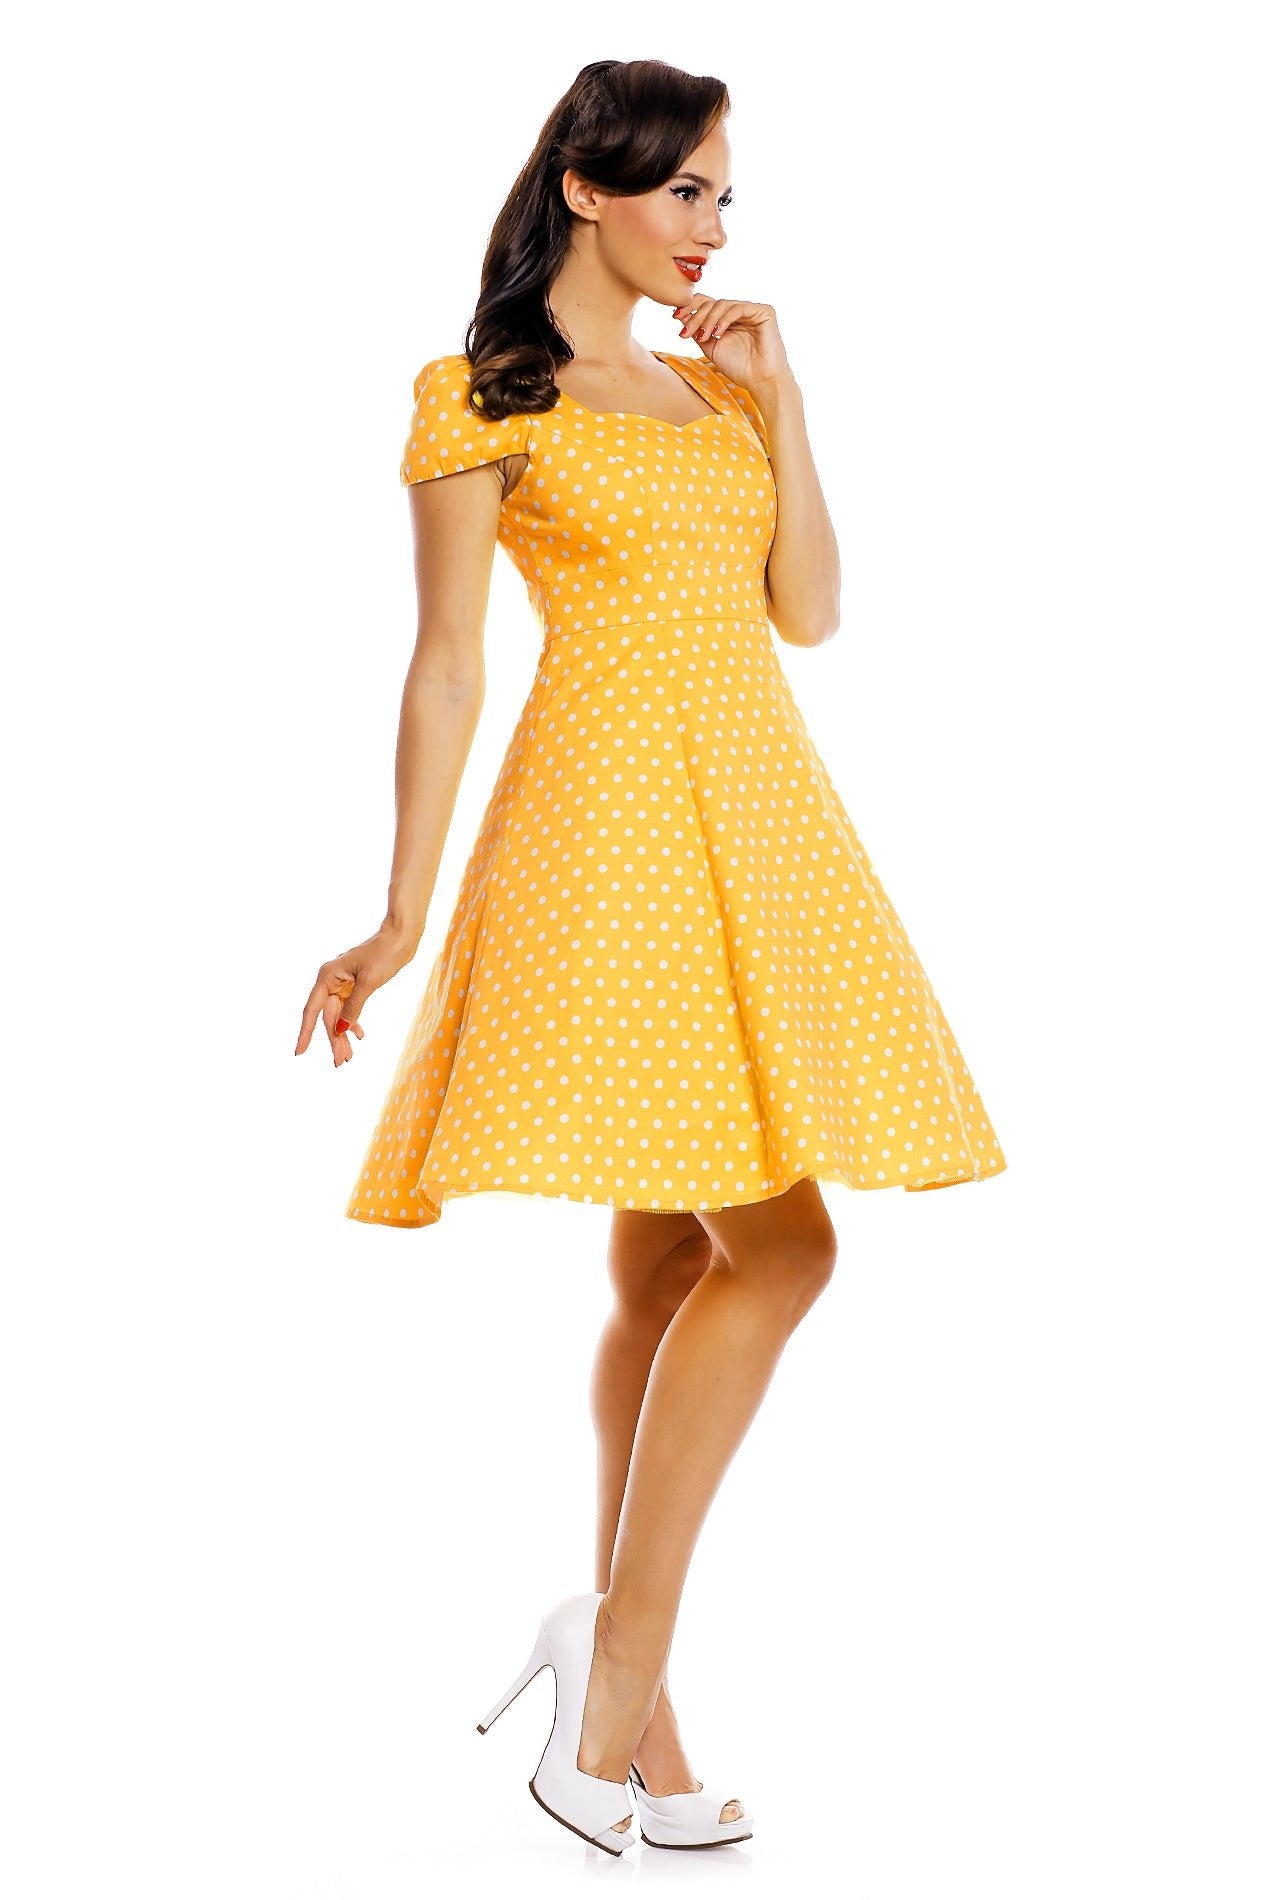 Woman's Flirty Fifties Style Dress in Yellow